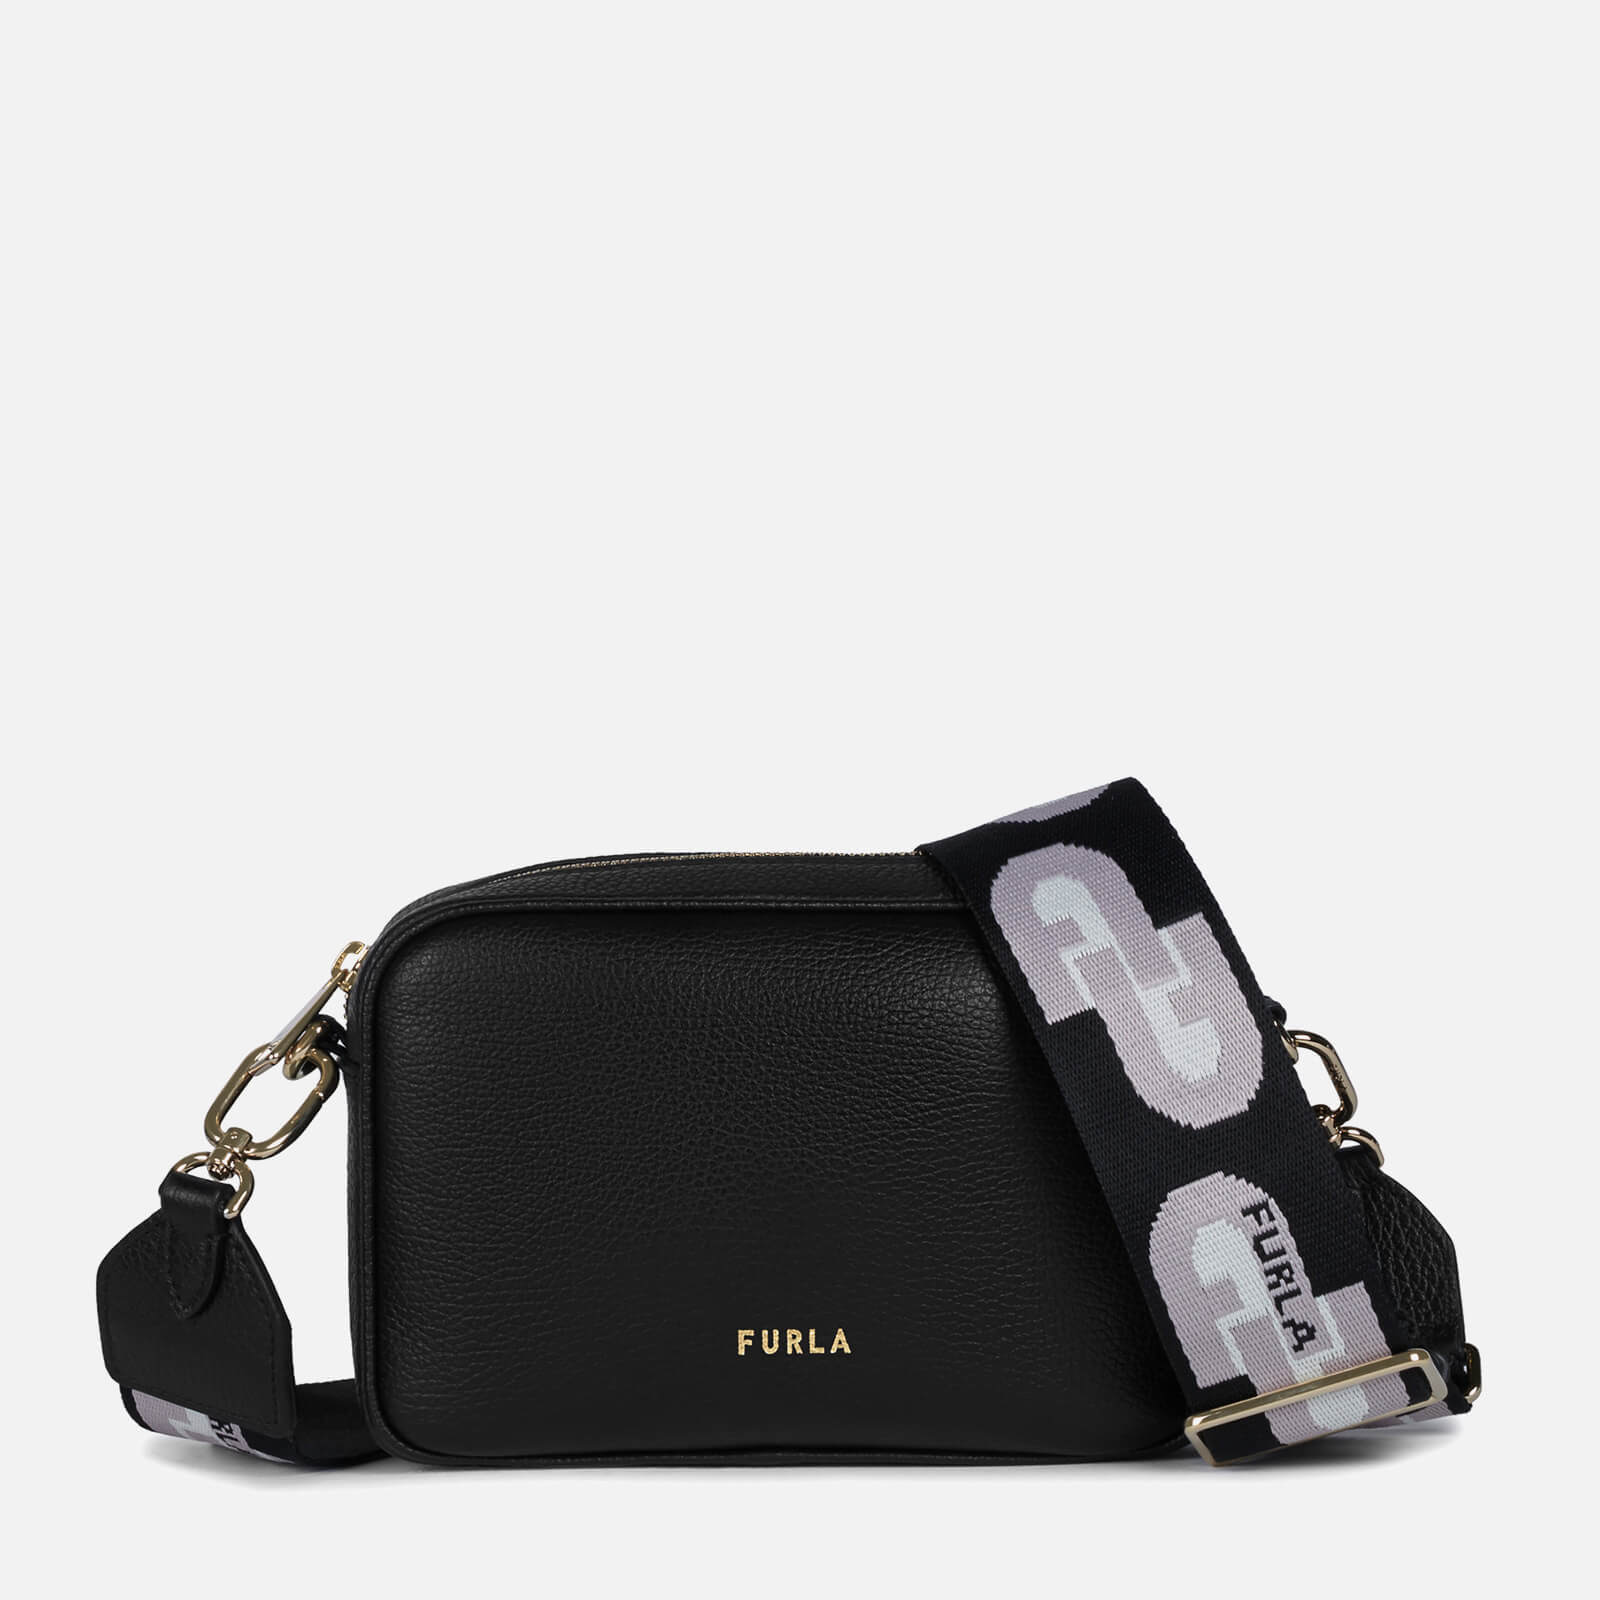 Furla Women's Real Mini Camera Case - Black